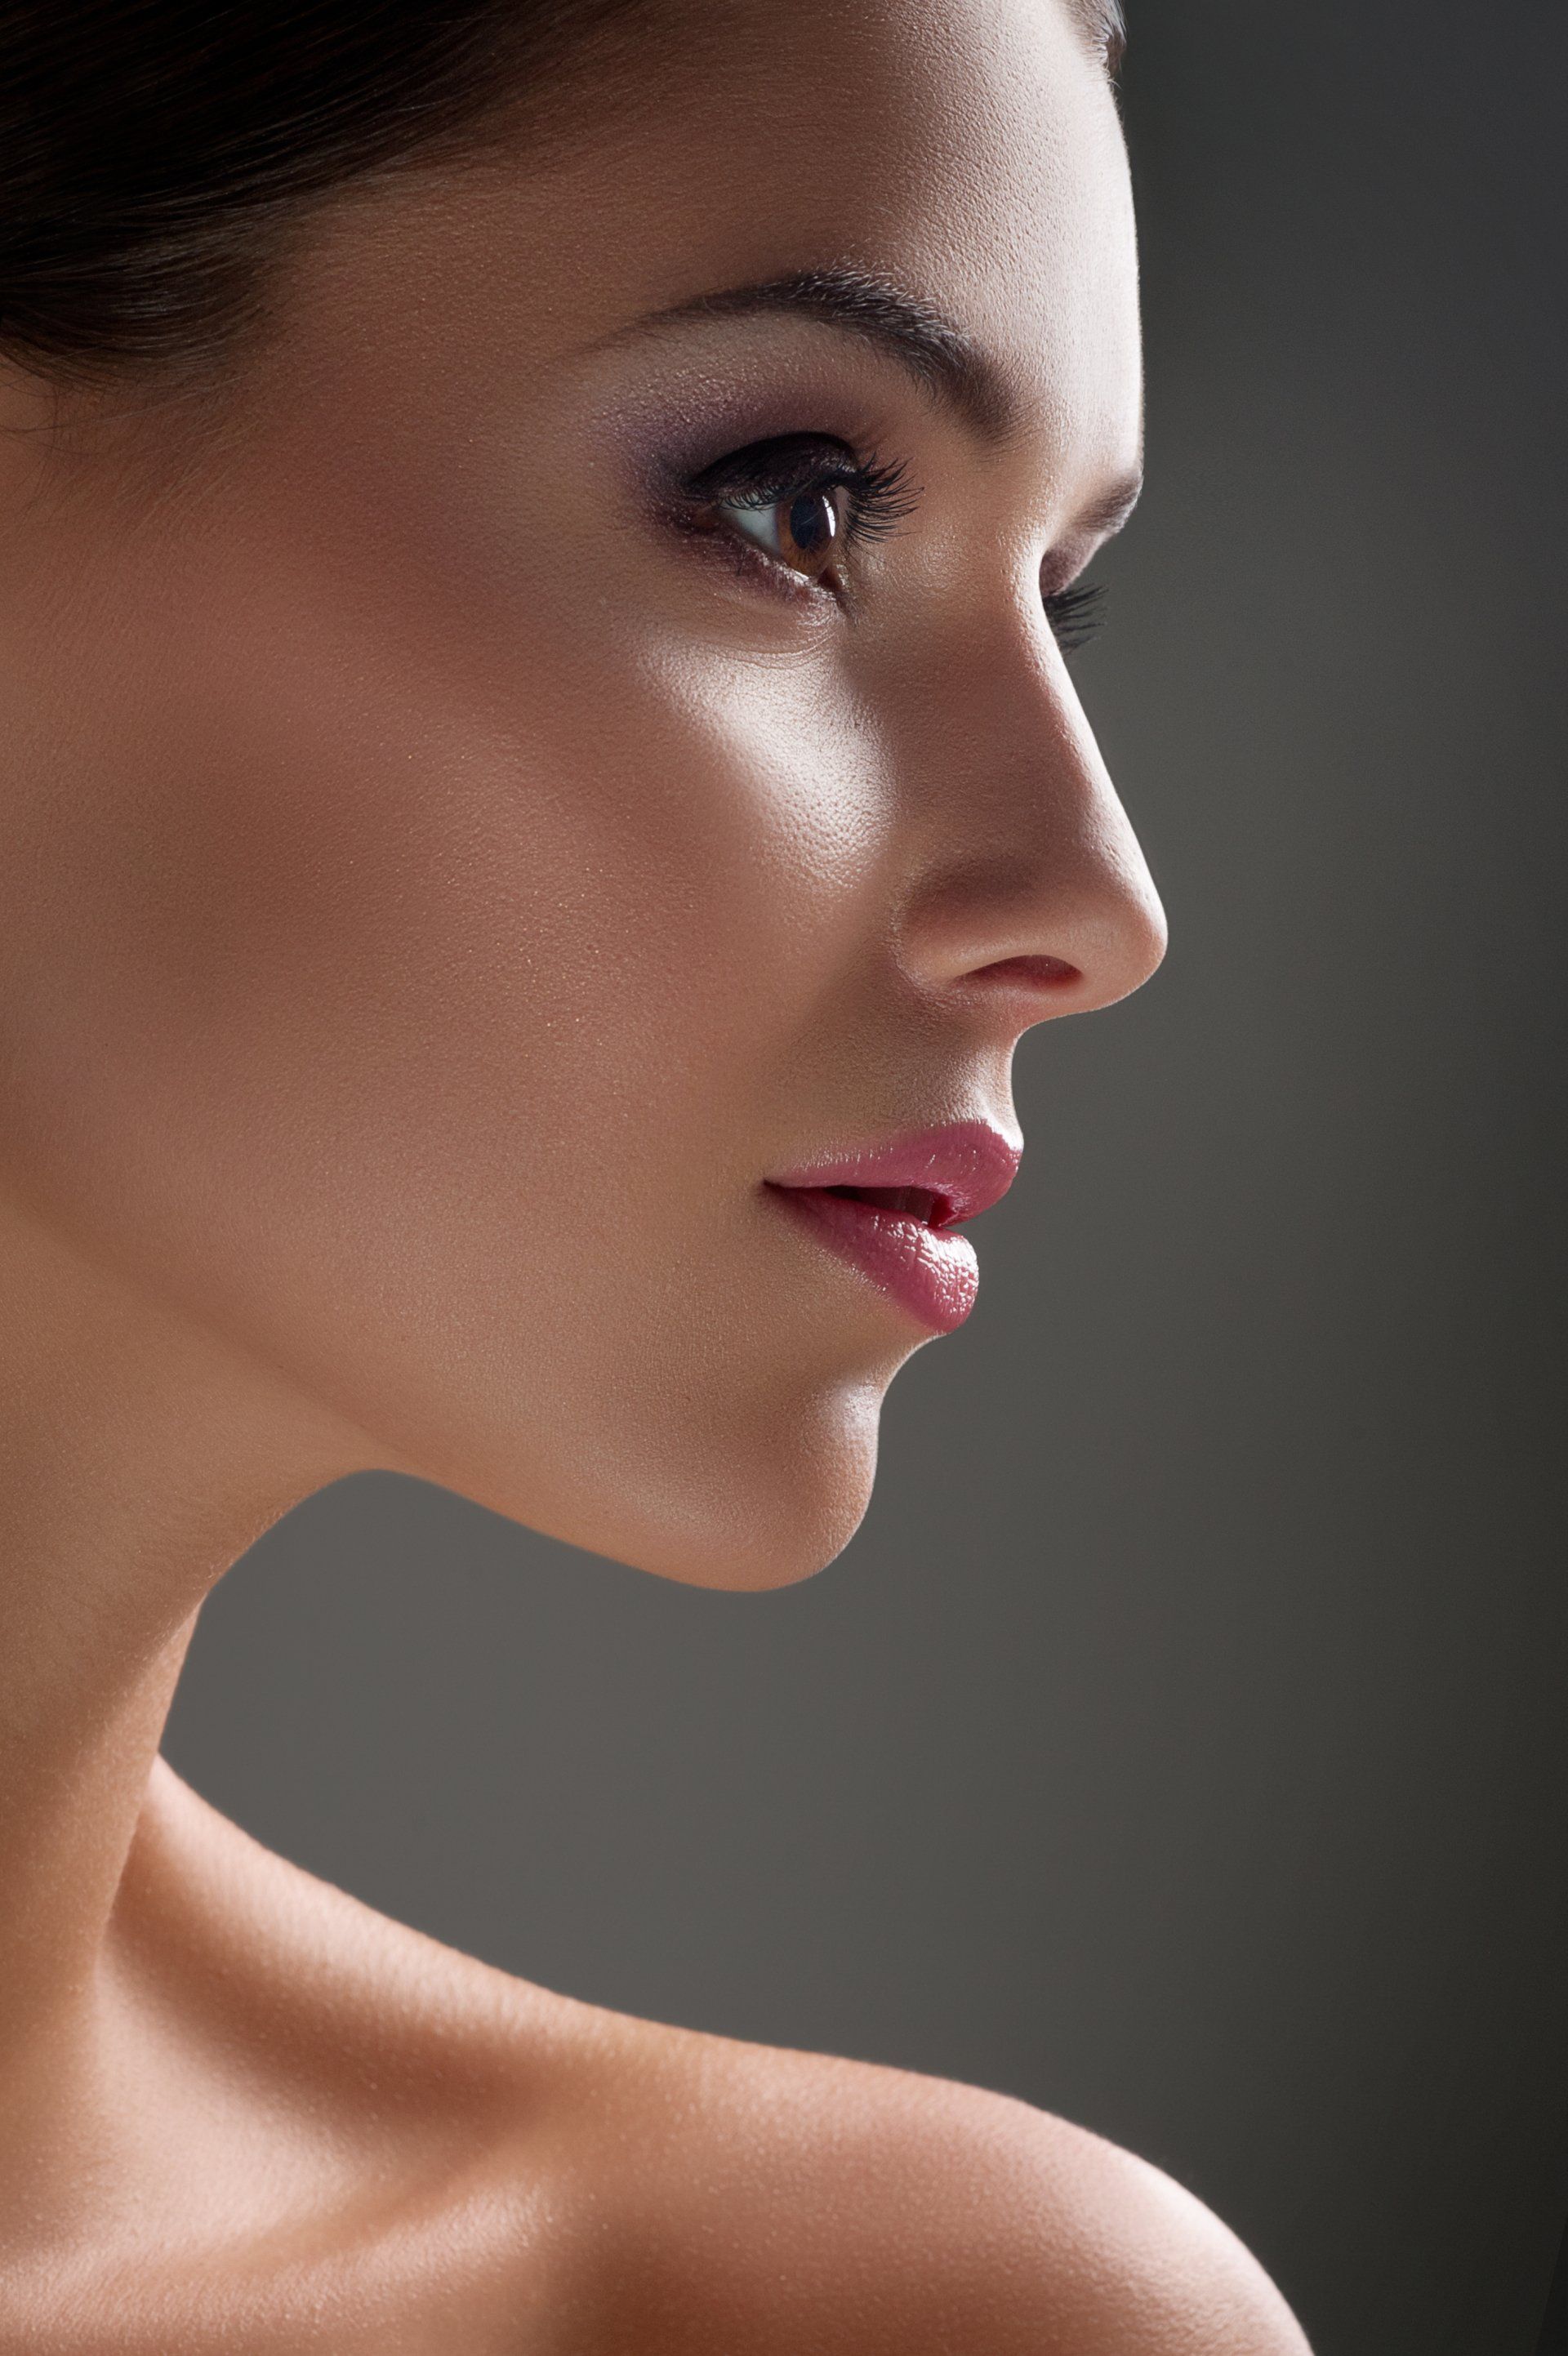 A headshot of a beautiful women's side profile